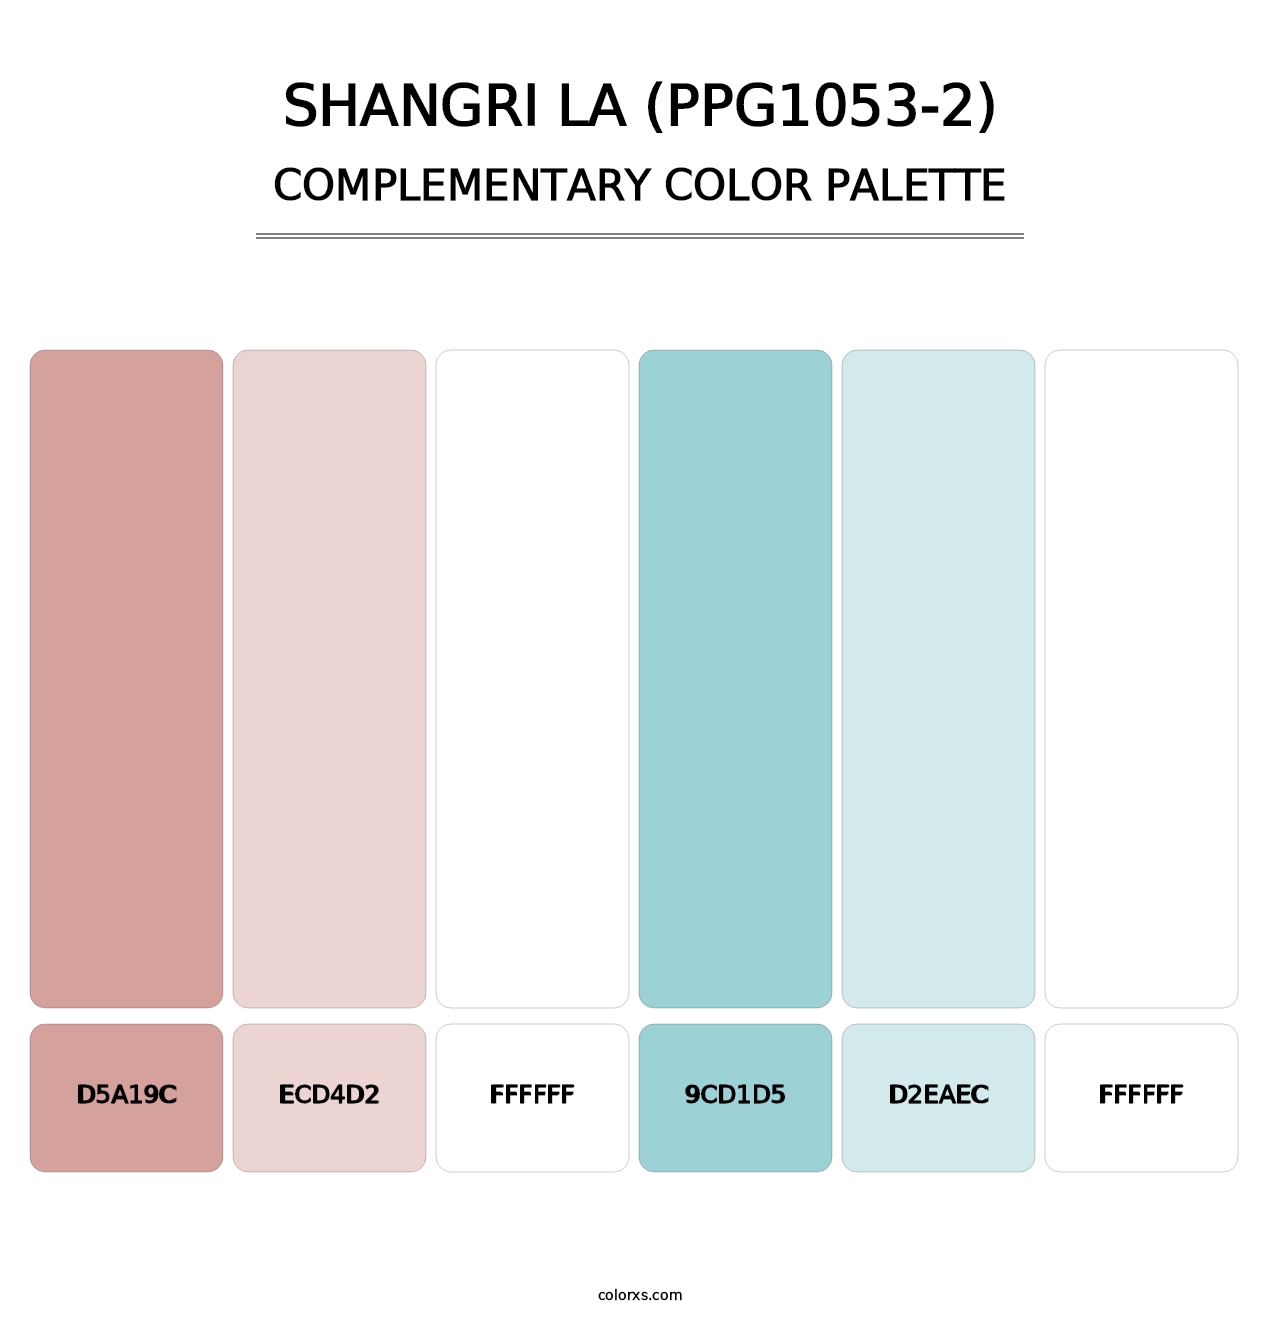 Shangri La (PPG1053-2) - Complementary Color Palette